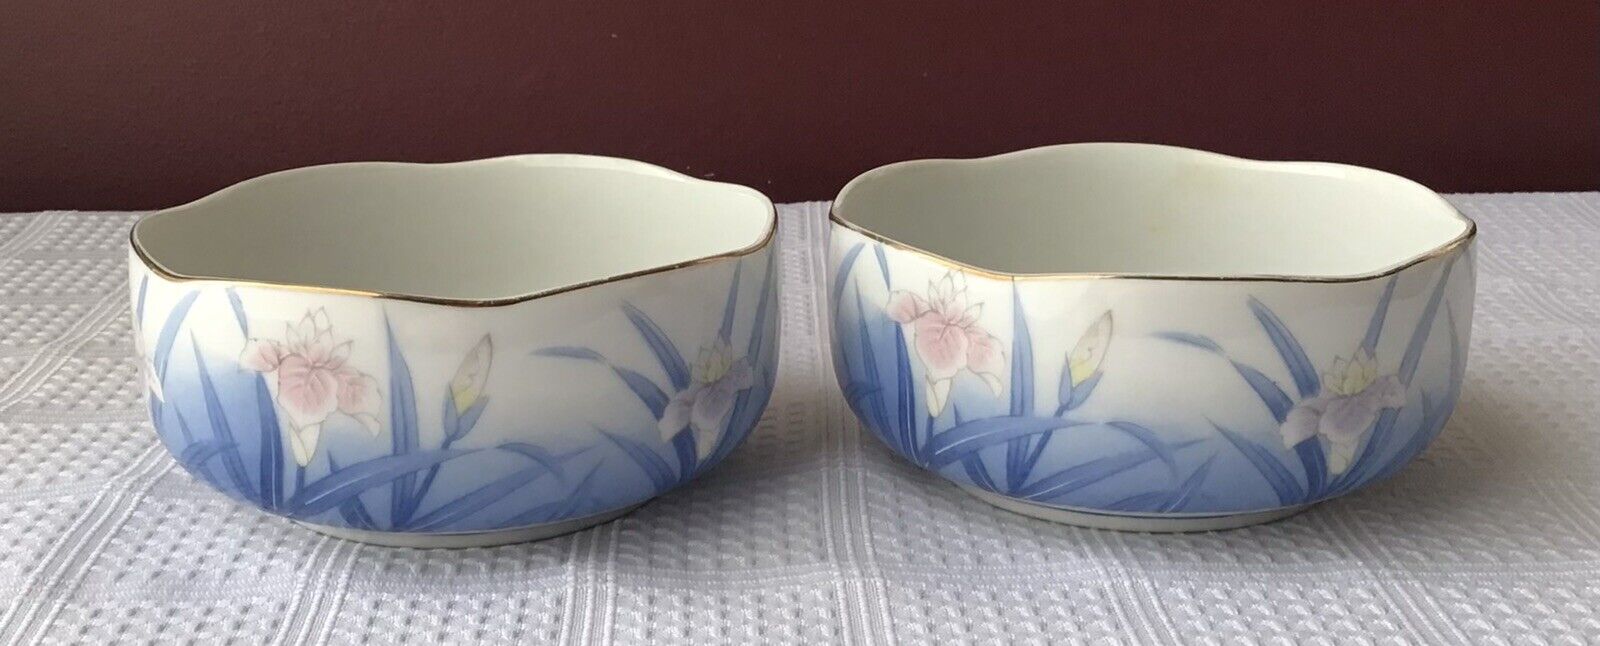 Pair of 2 Vintage Japanese Bowls, 4 1/2” x 4 1/2” x 2”